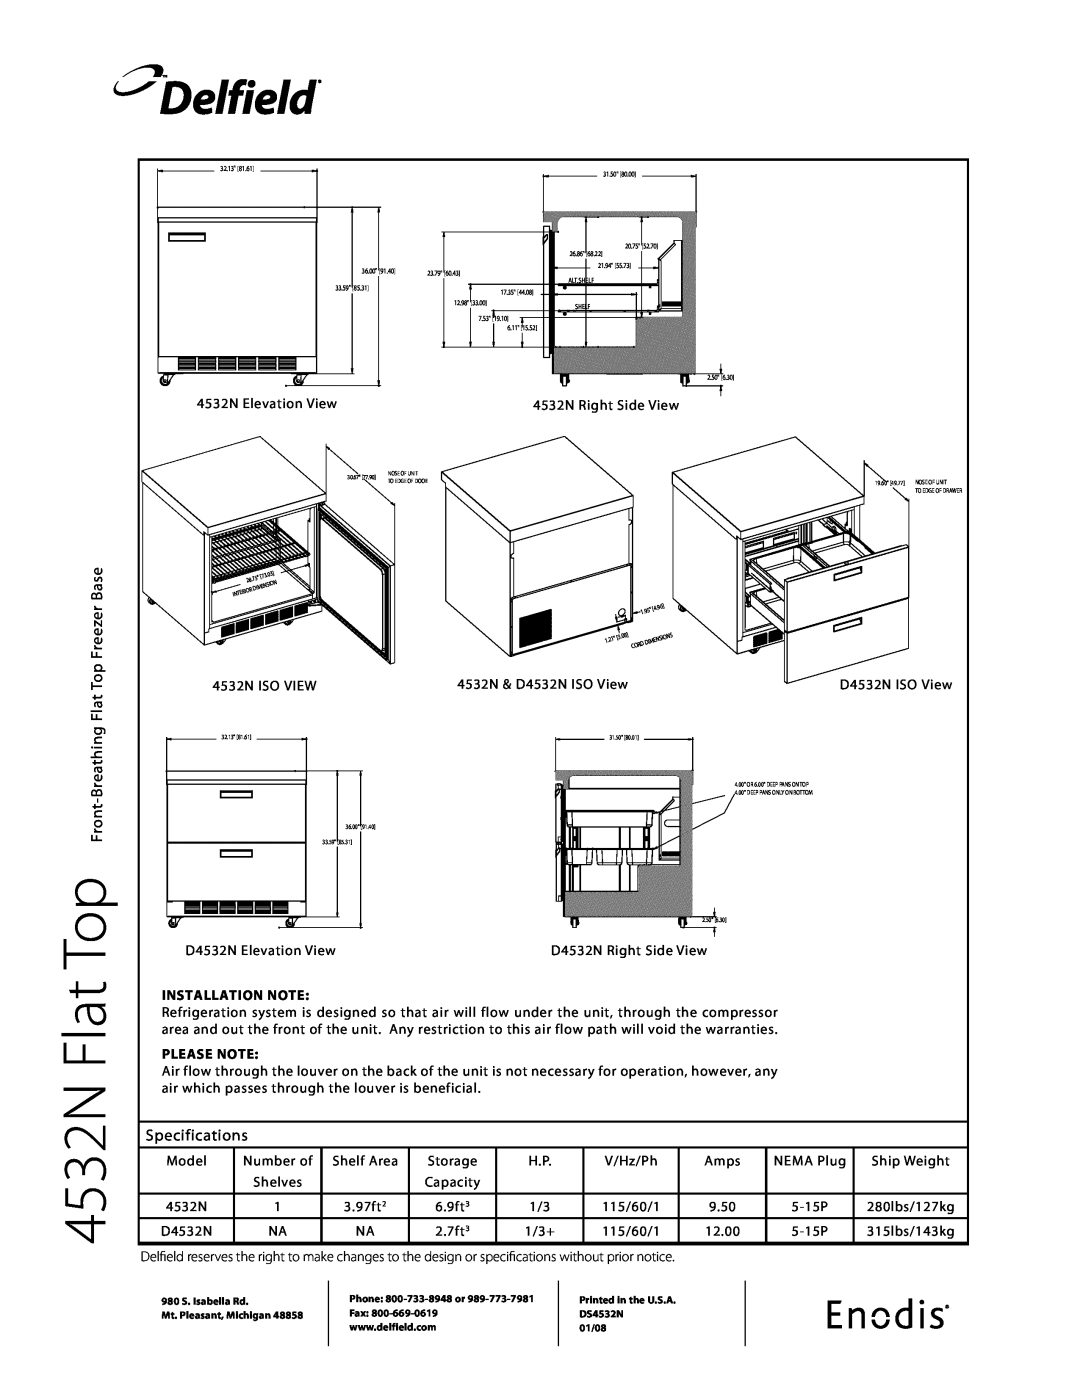 Delfield specifications Flat Top Freezer Base, Specifications, 4532N Flat, Delfield, Installation Note, Please Note 